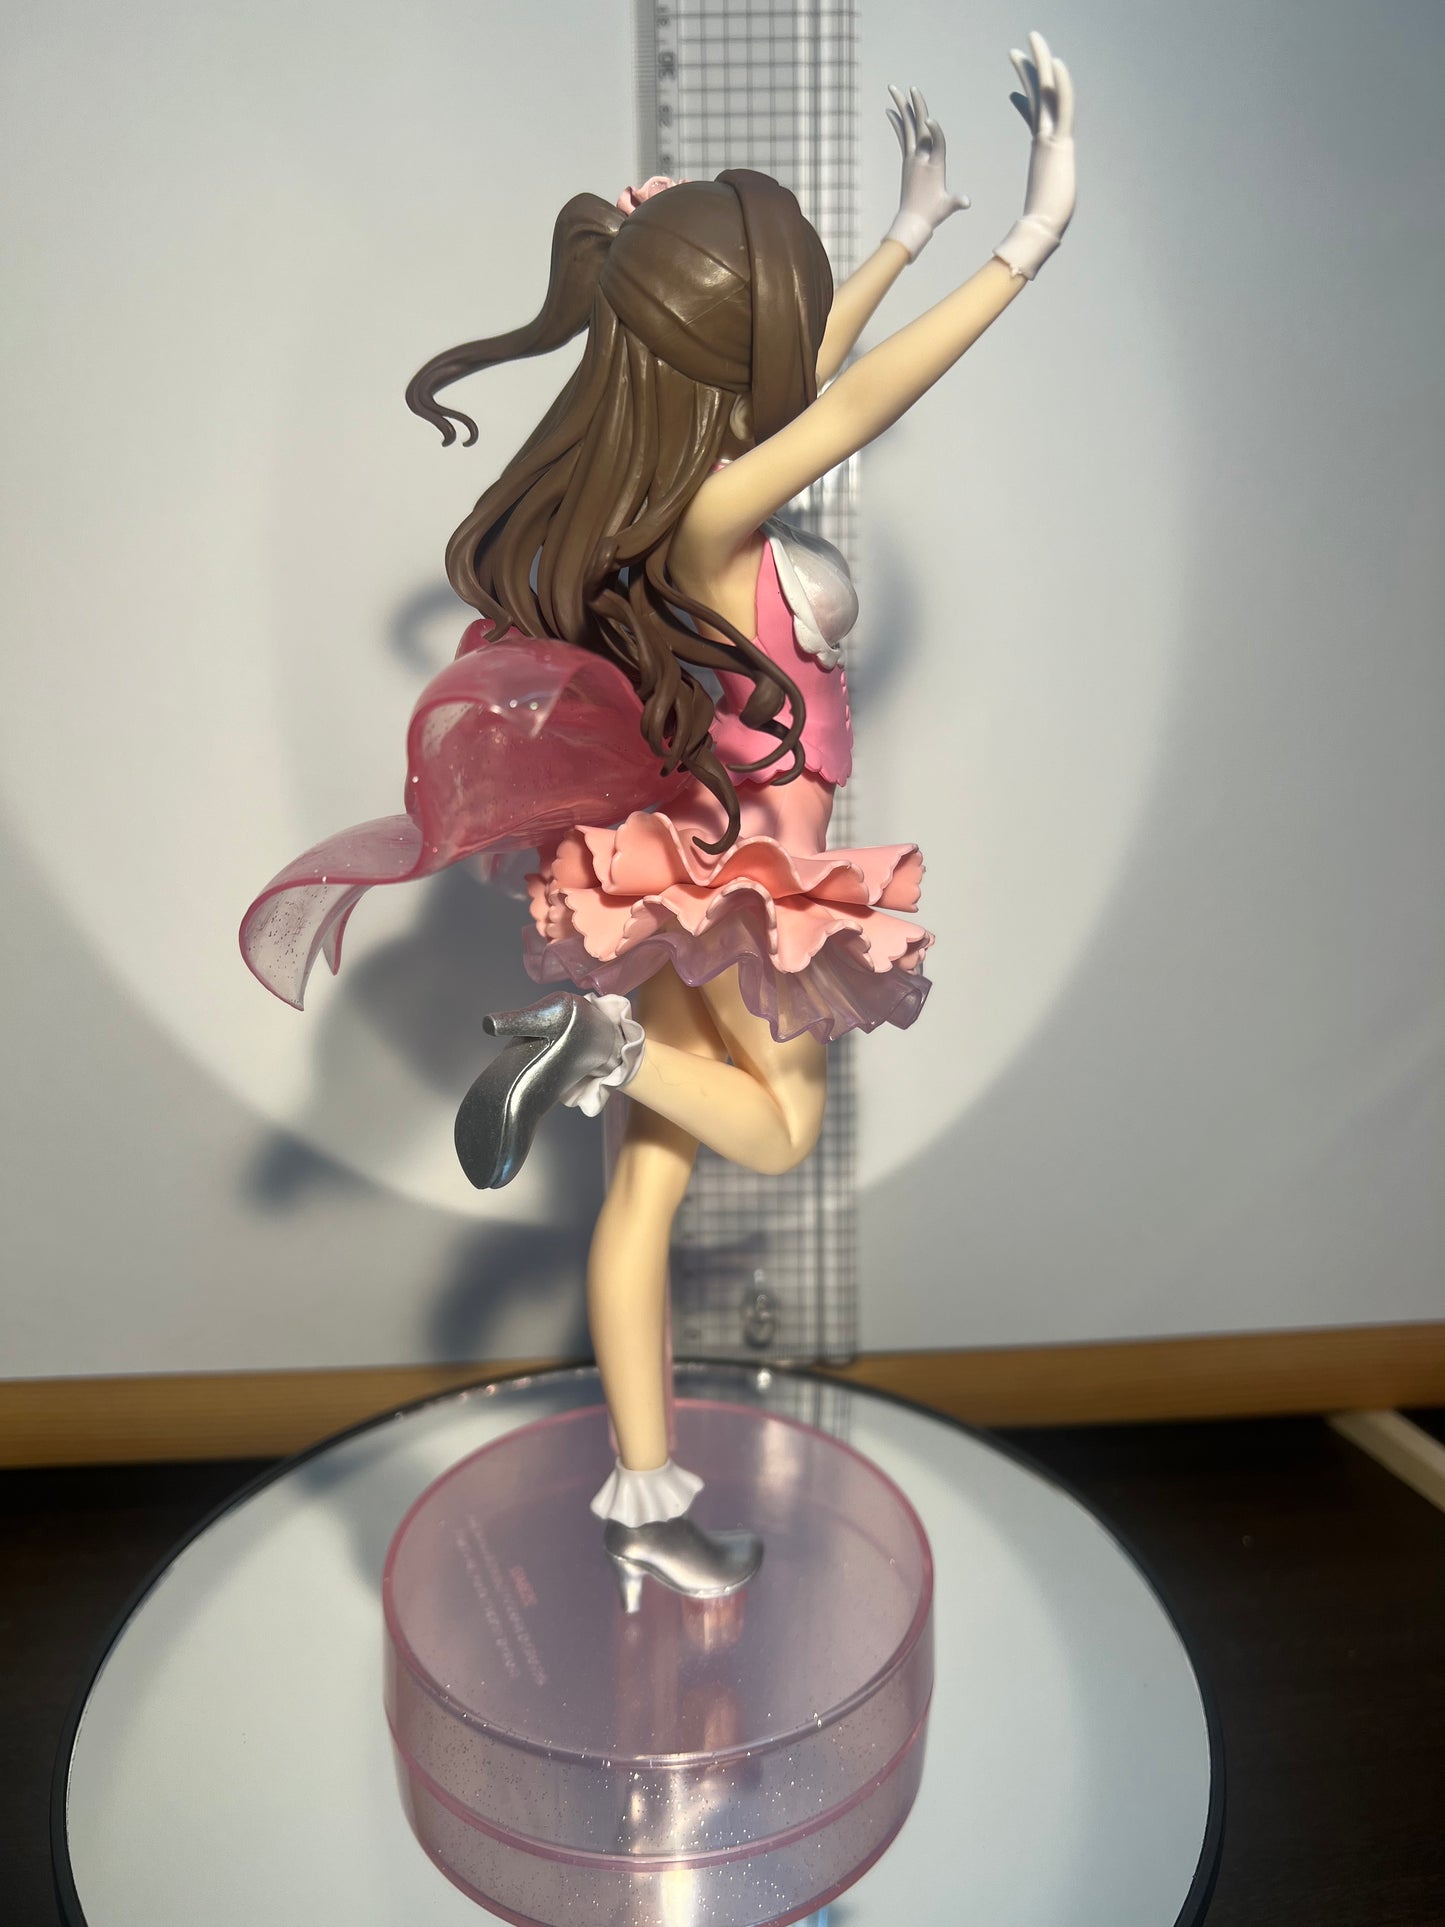 The Idol Master Cinderella Girls ESPRESTO est Dressy and Motions Uzuki Shimamura 25cm Banpresto JAIA BANDAI #144